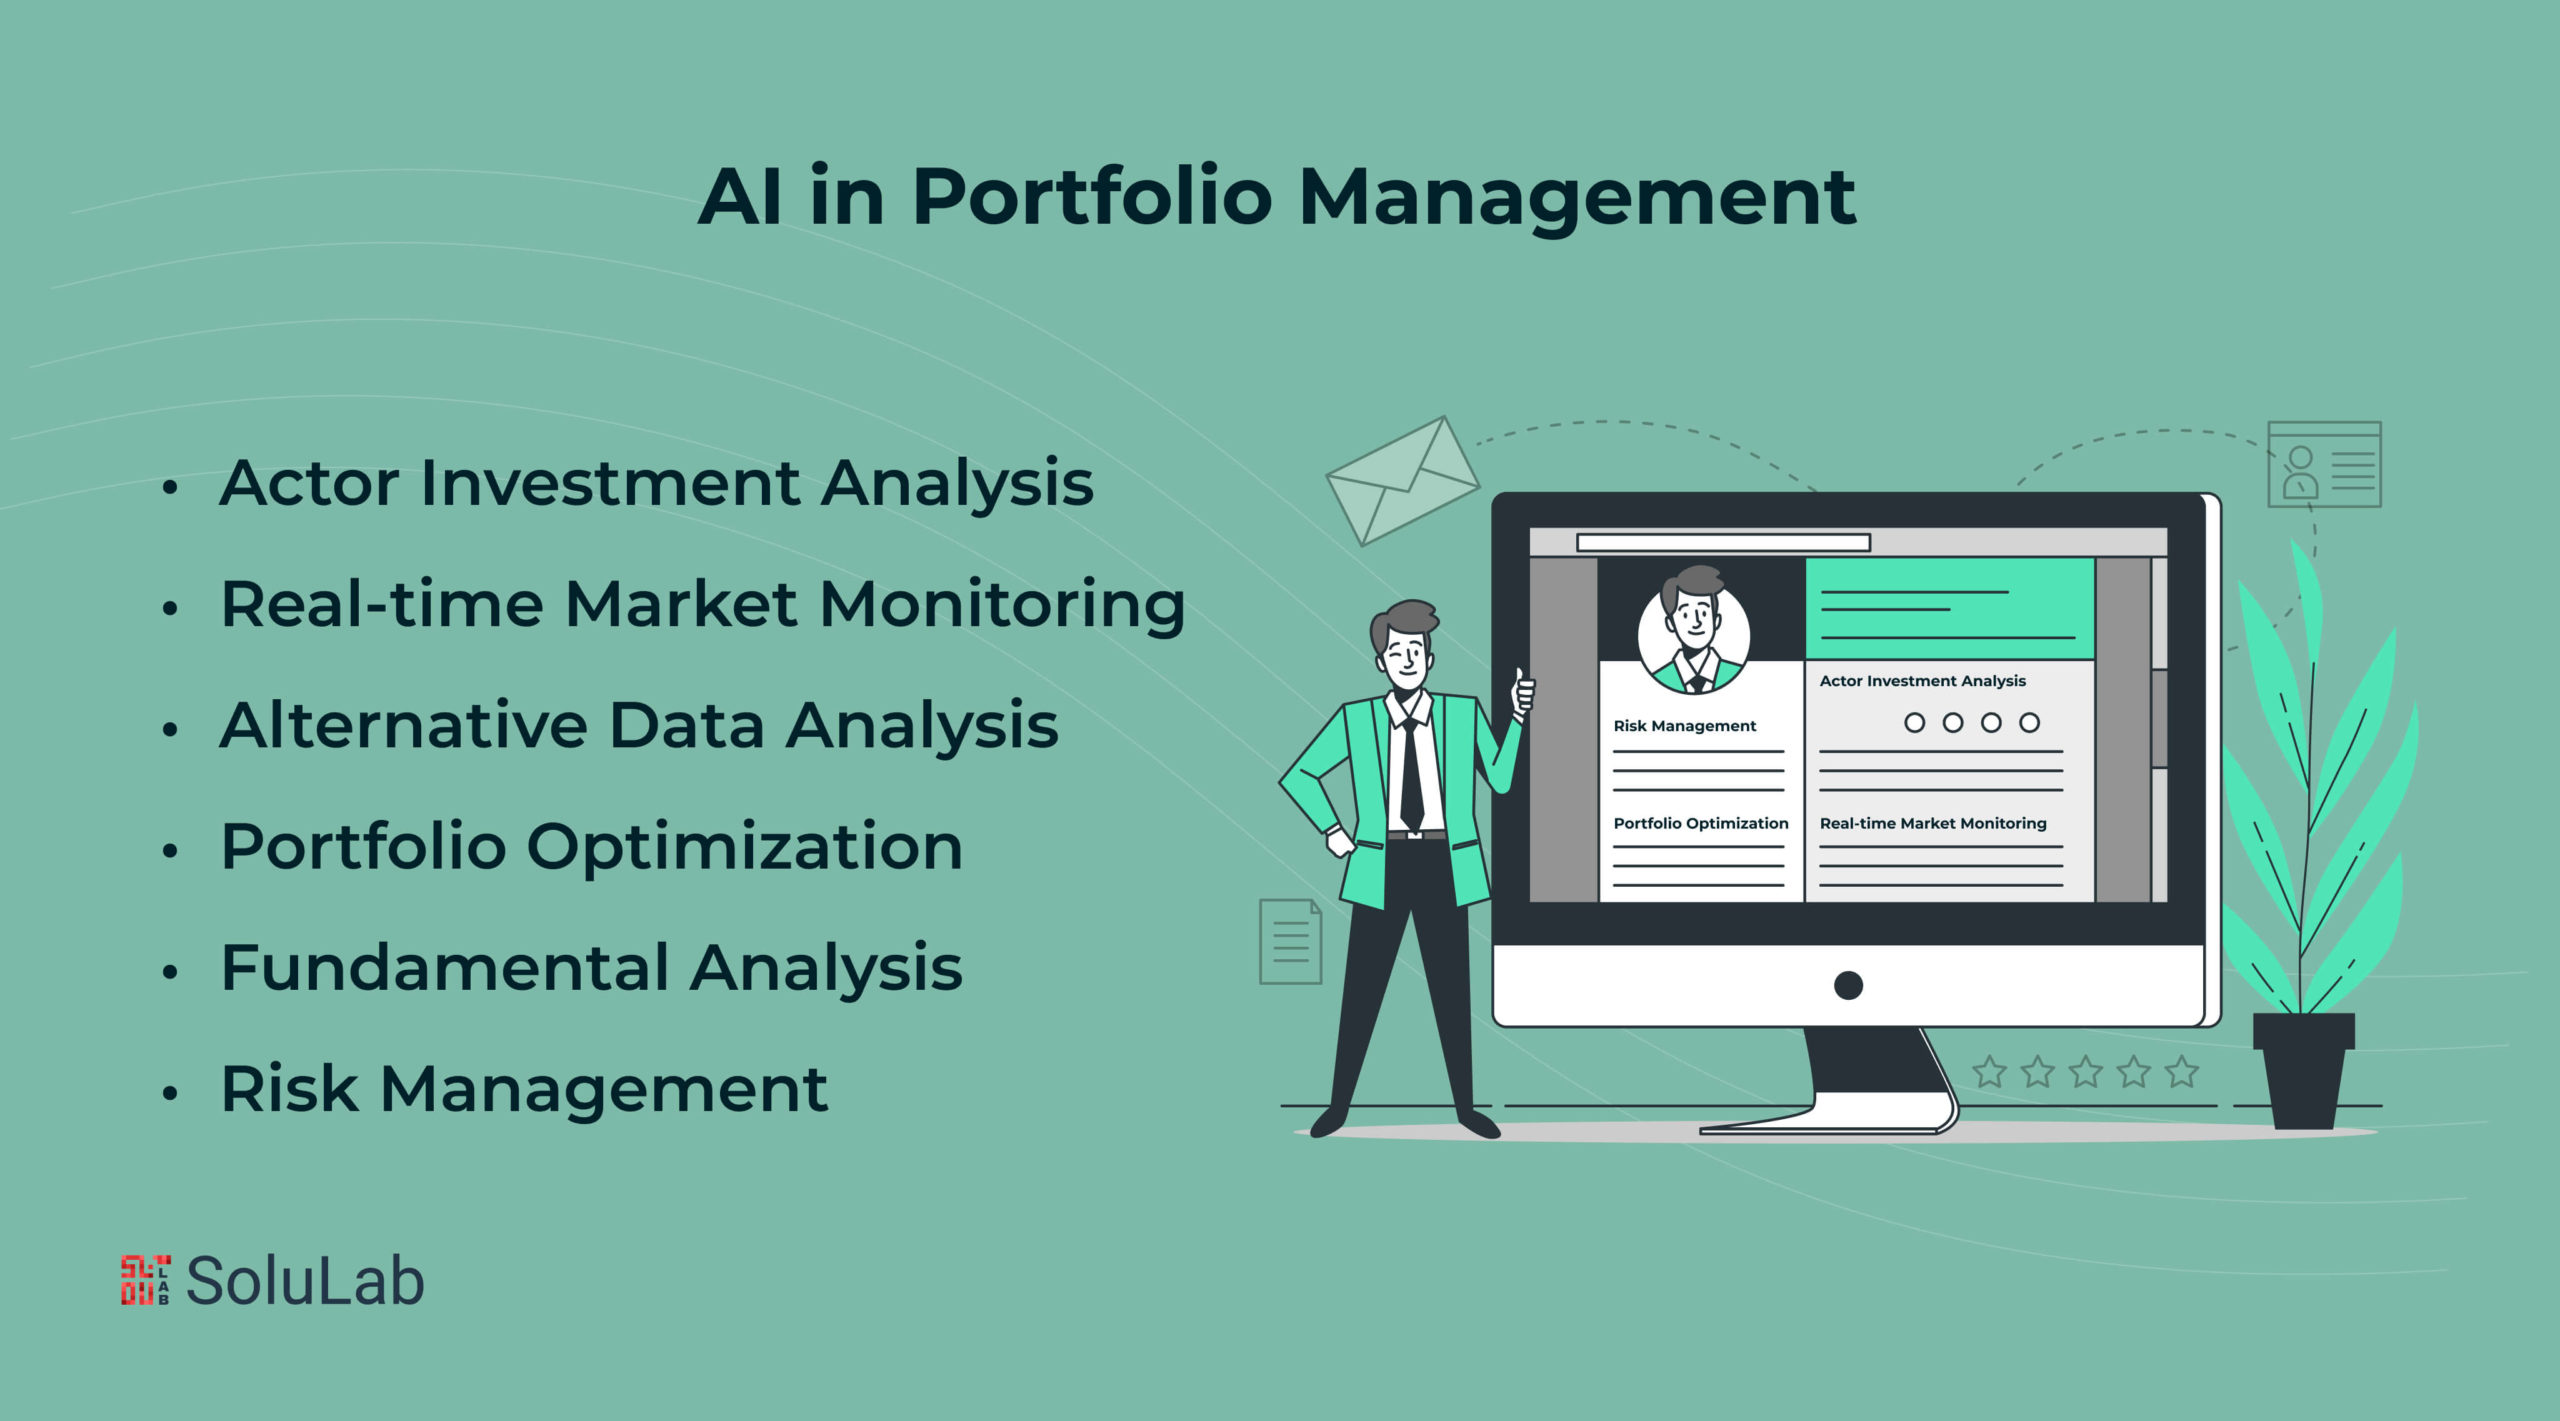 Guide on AI in Portfolio Management